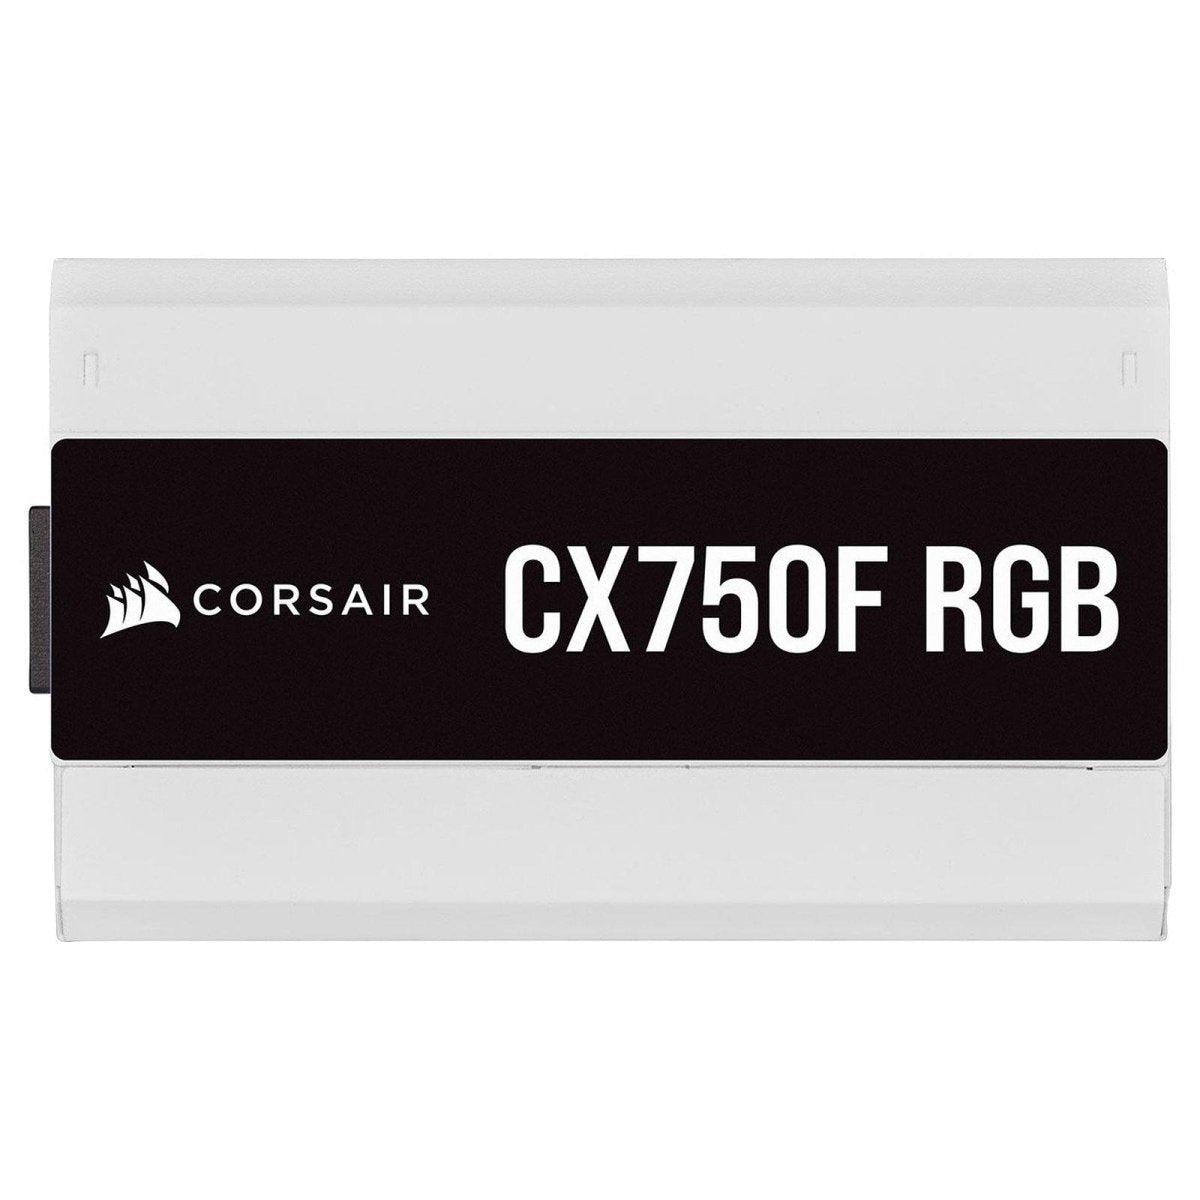 Corsair CX750F RGB maroc Prix Alimentation PC pas cher - smartmarket.ma